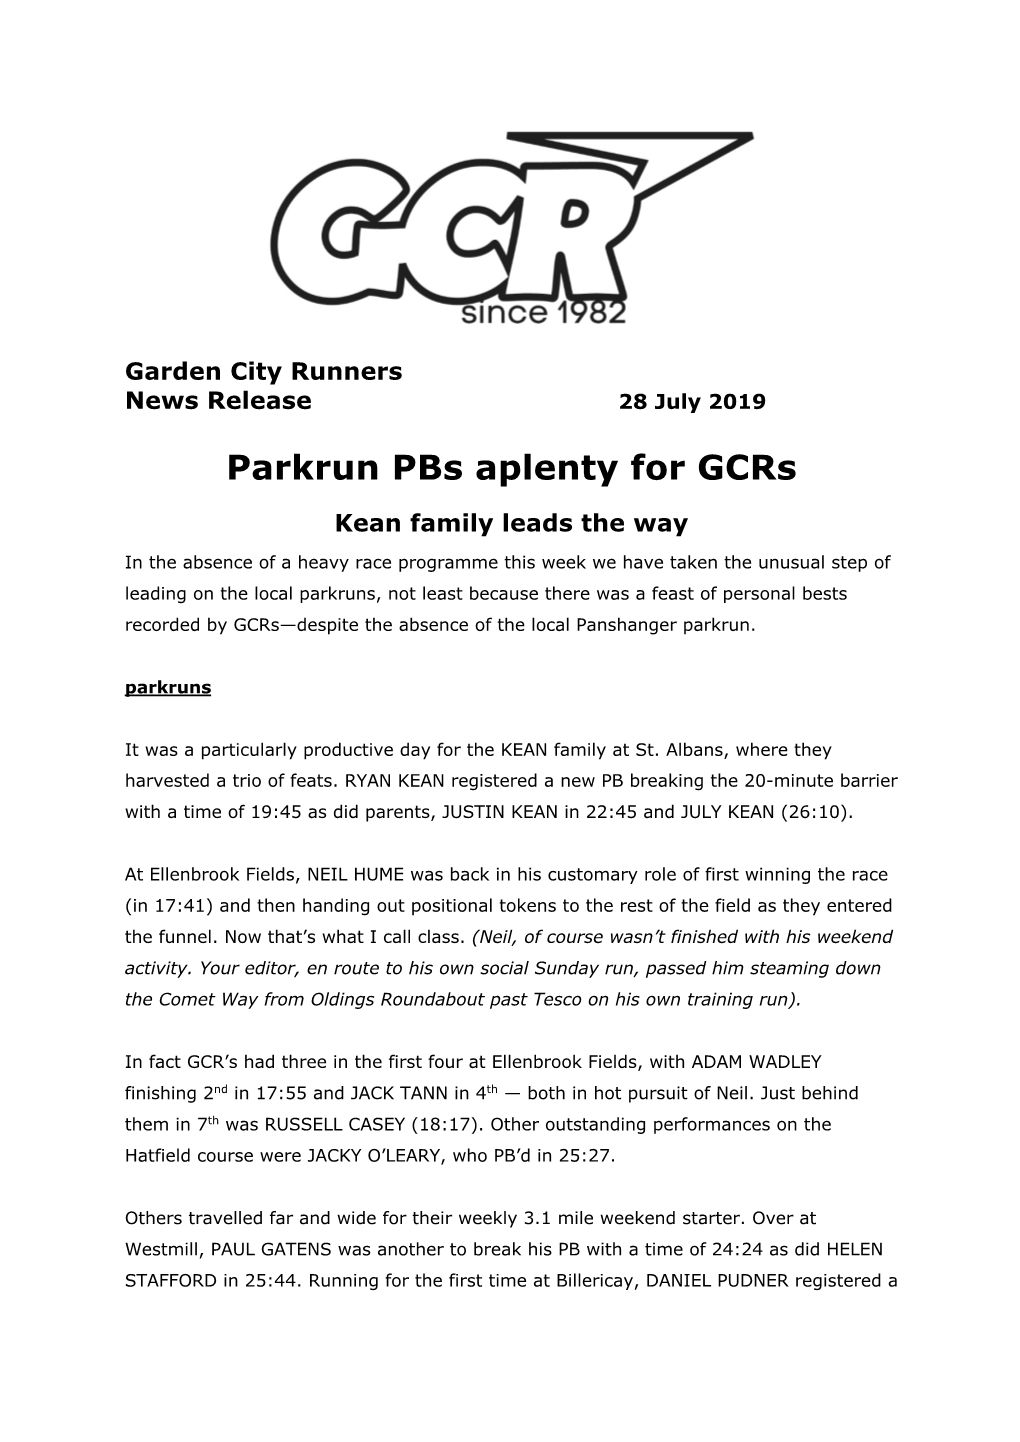 Parkrun Pbs Aplenty for Gcrs